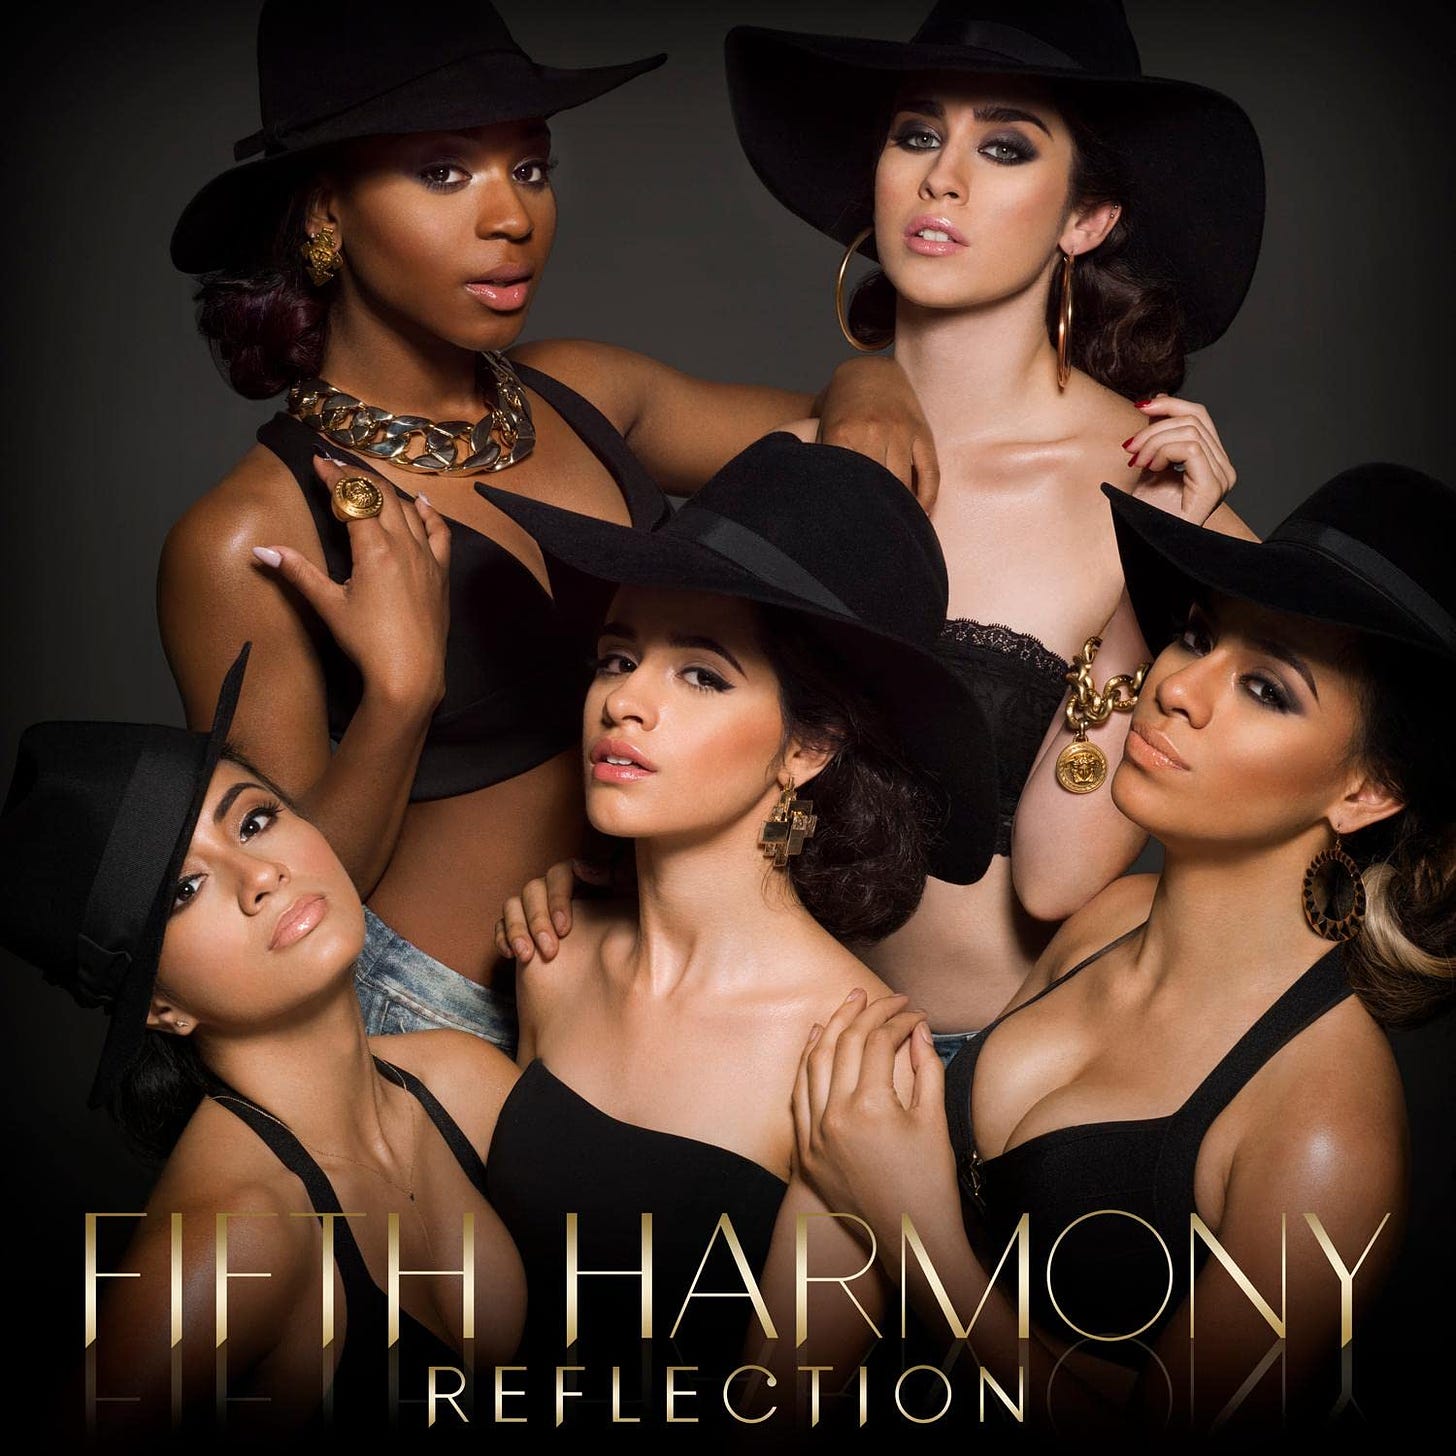 Fifth Harmony - Reflection (Deluxe Edition) - Amazon.com Music